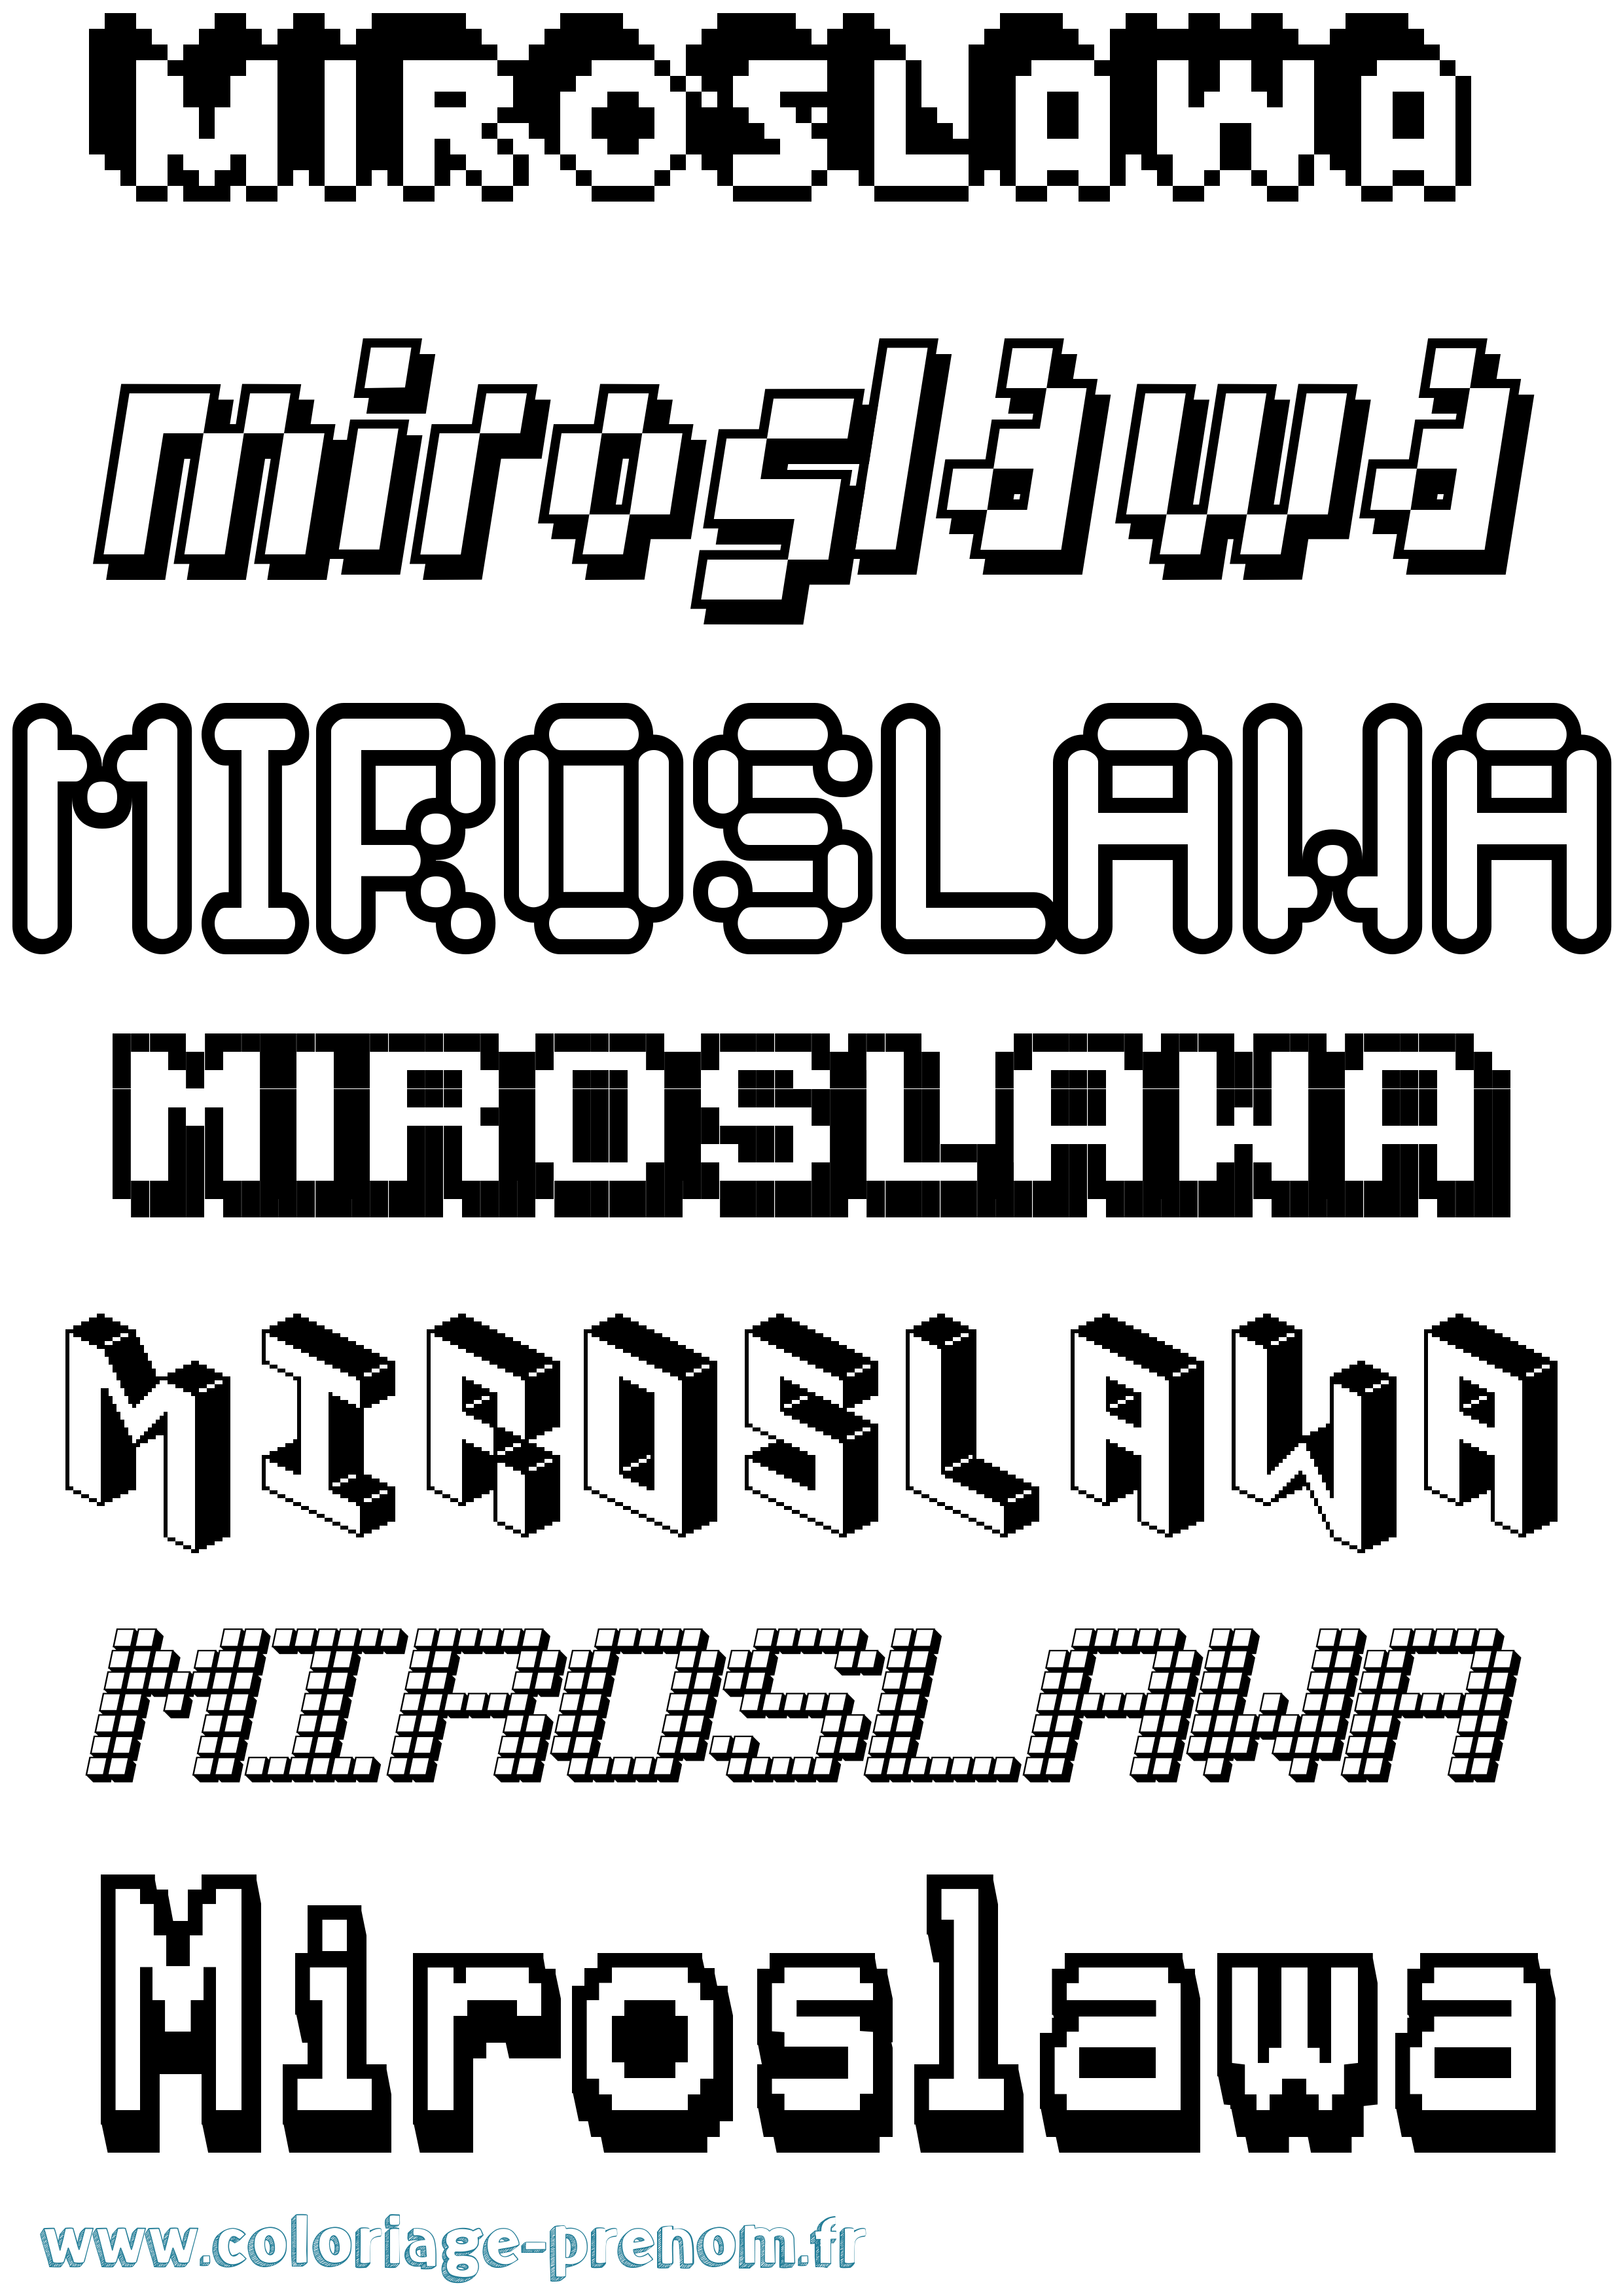 Coloriage prénom Miroslawa Pixel